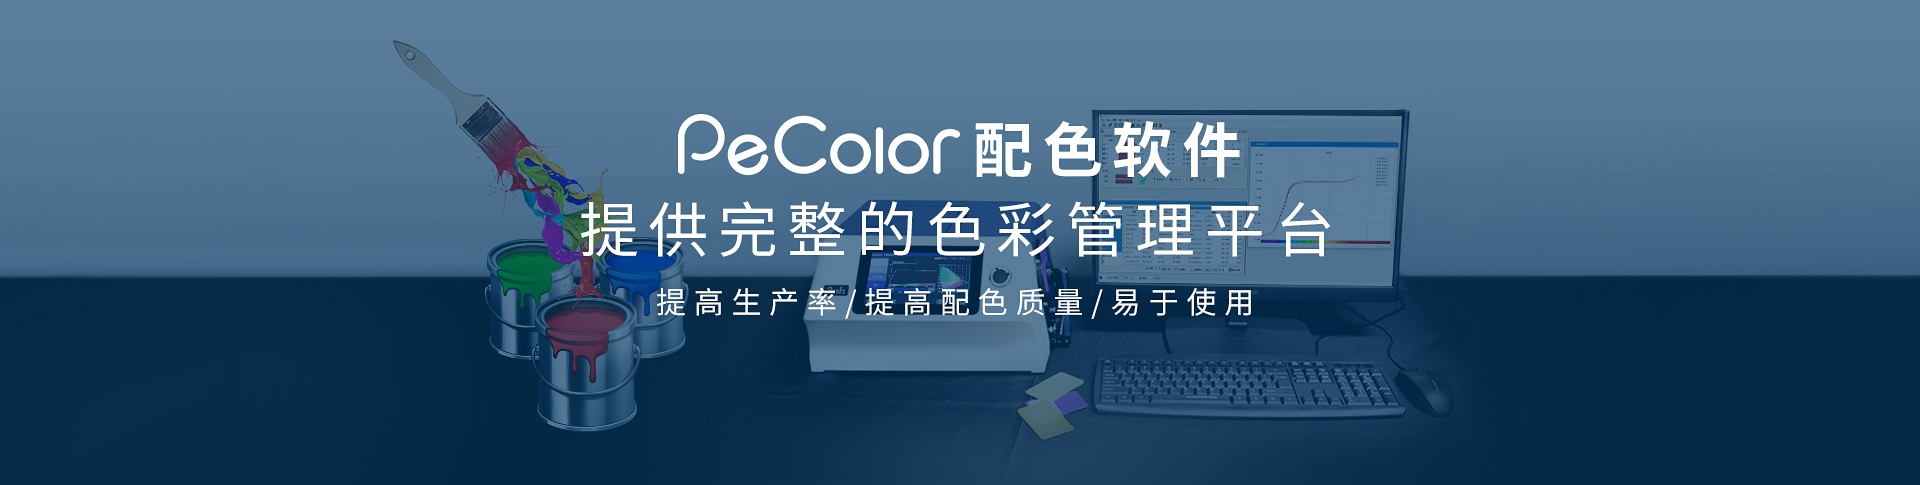 PeColor配色软件优势